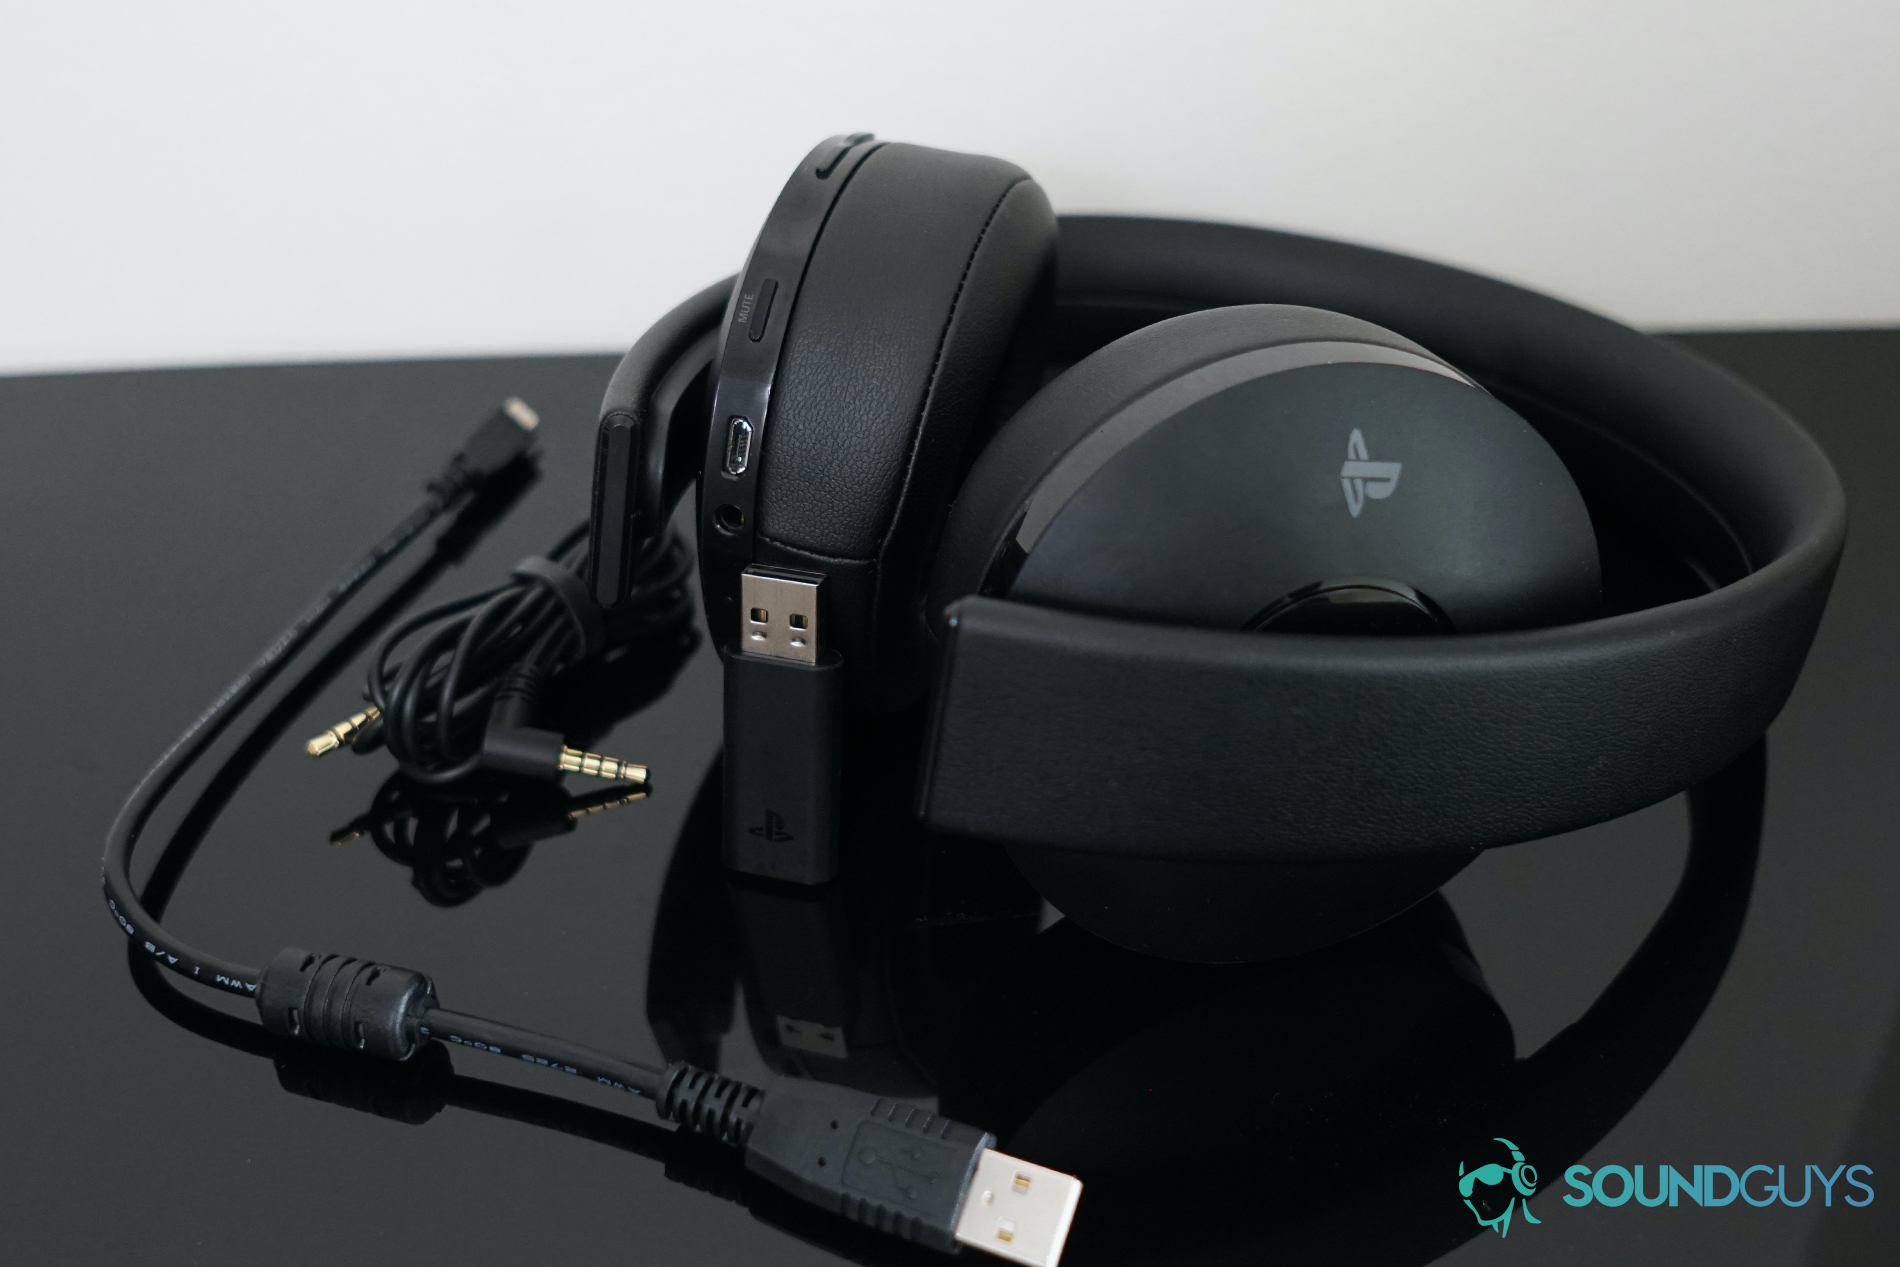 Oxide broeden Lucht PlayStation Gold Wireless Headset review - SoundGuys